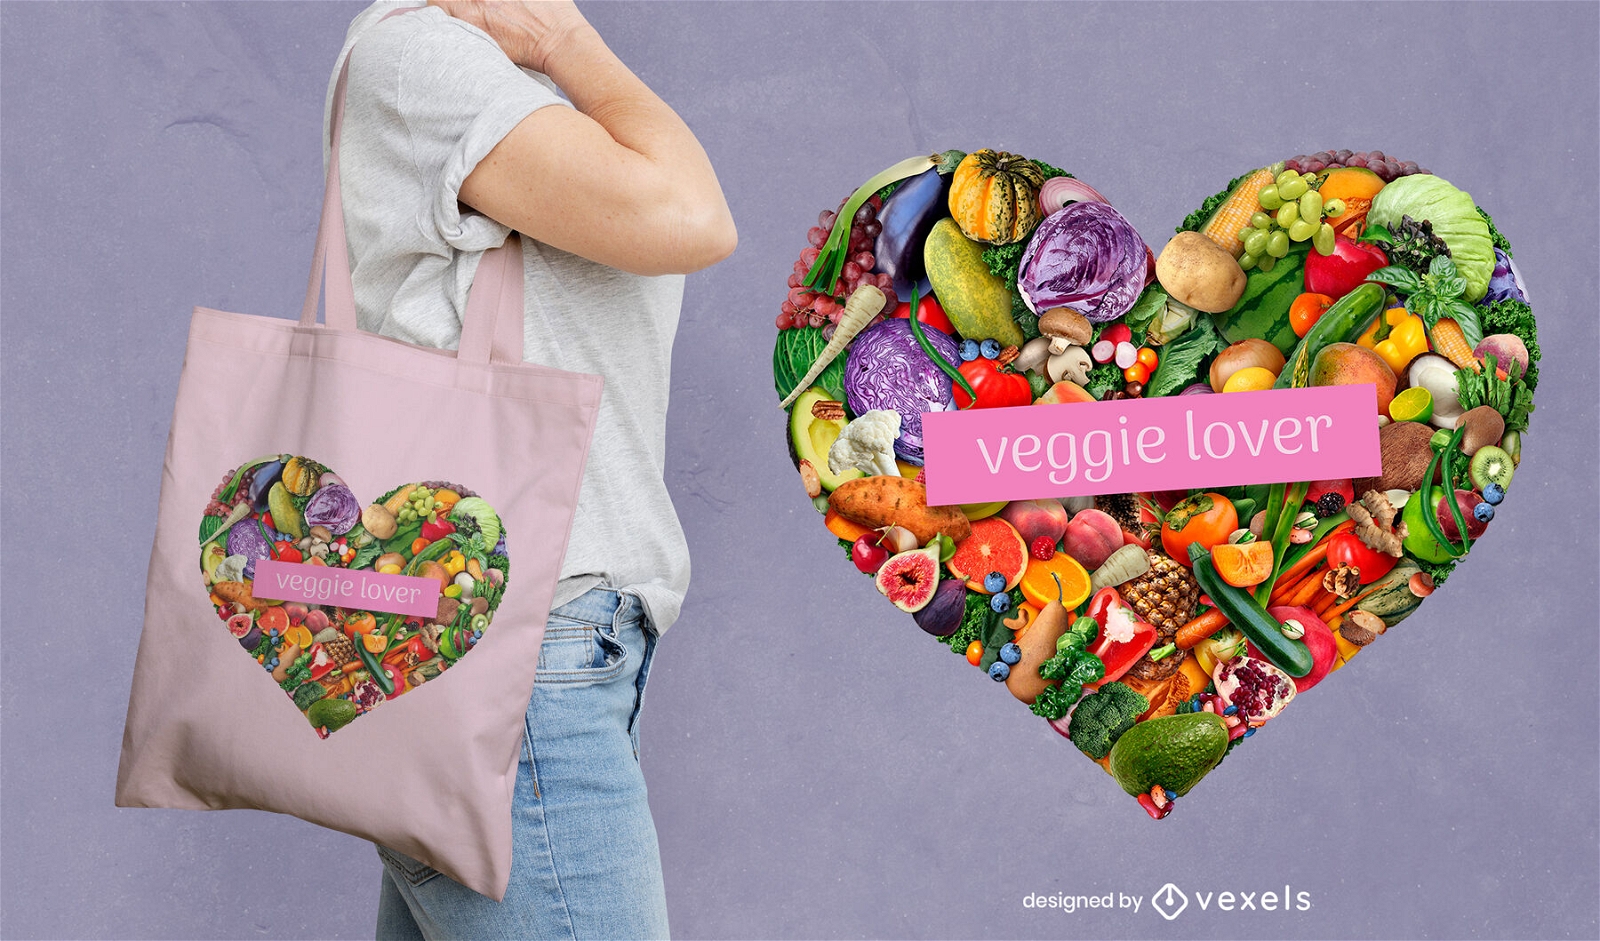 Dise?o de bolsa de asas de alimentos saludables de verduras.